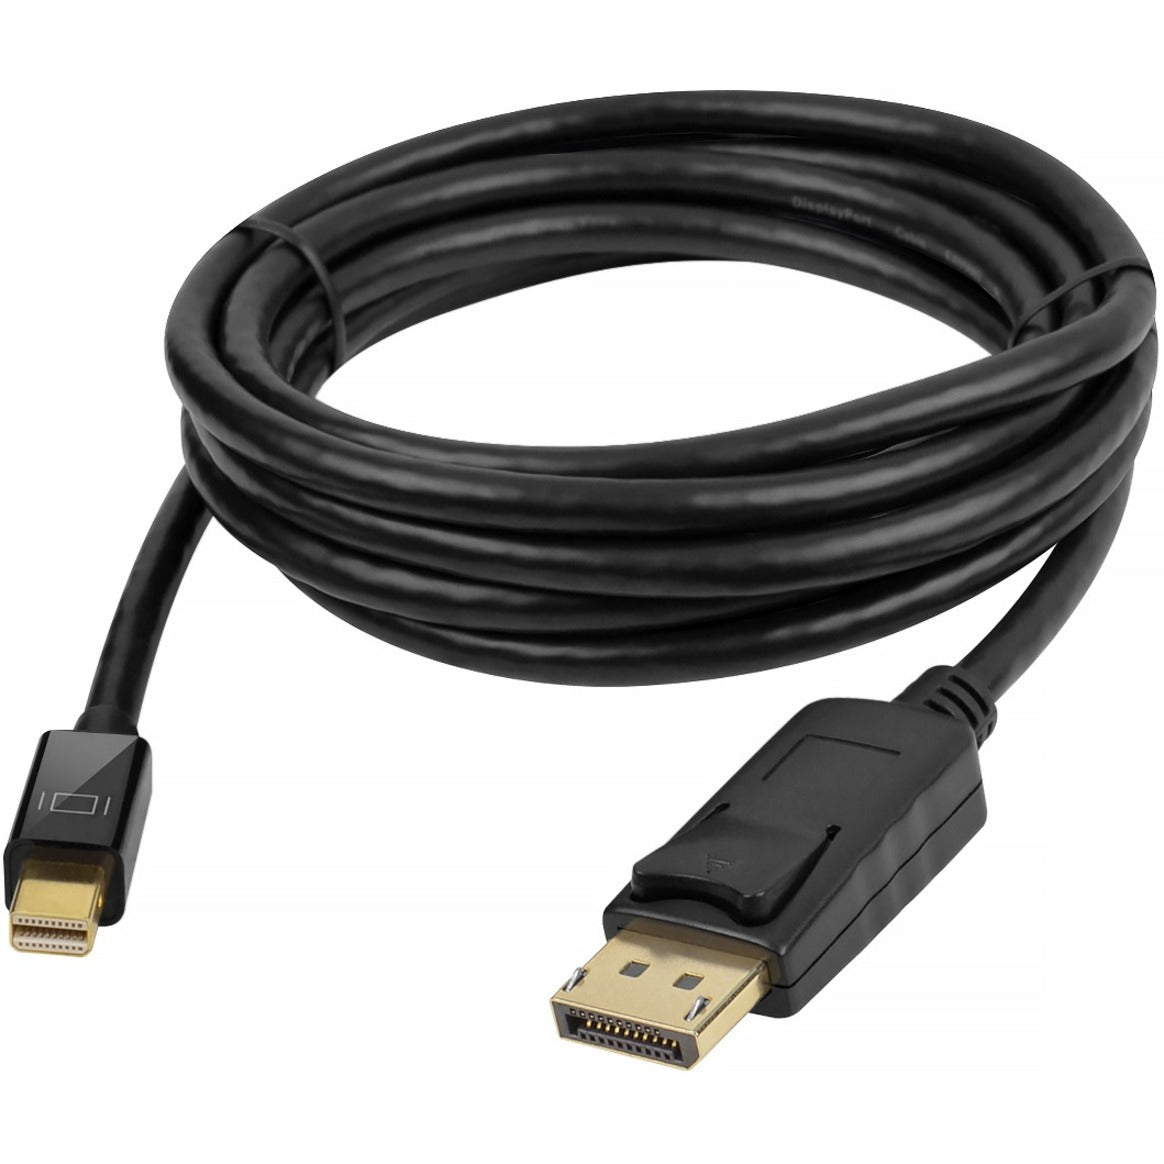 SIIG CB-DP1J12-S1 Mini DisplayPort to DisplayPort Cable - 2M, 4Kx2K Resolution, Thunderbolt Compatible